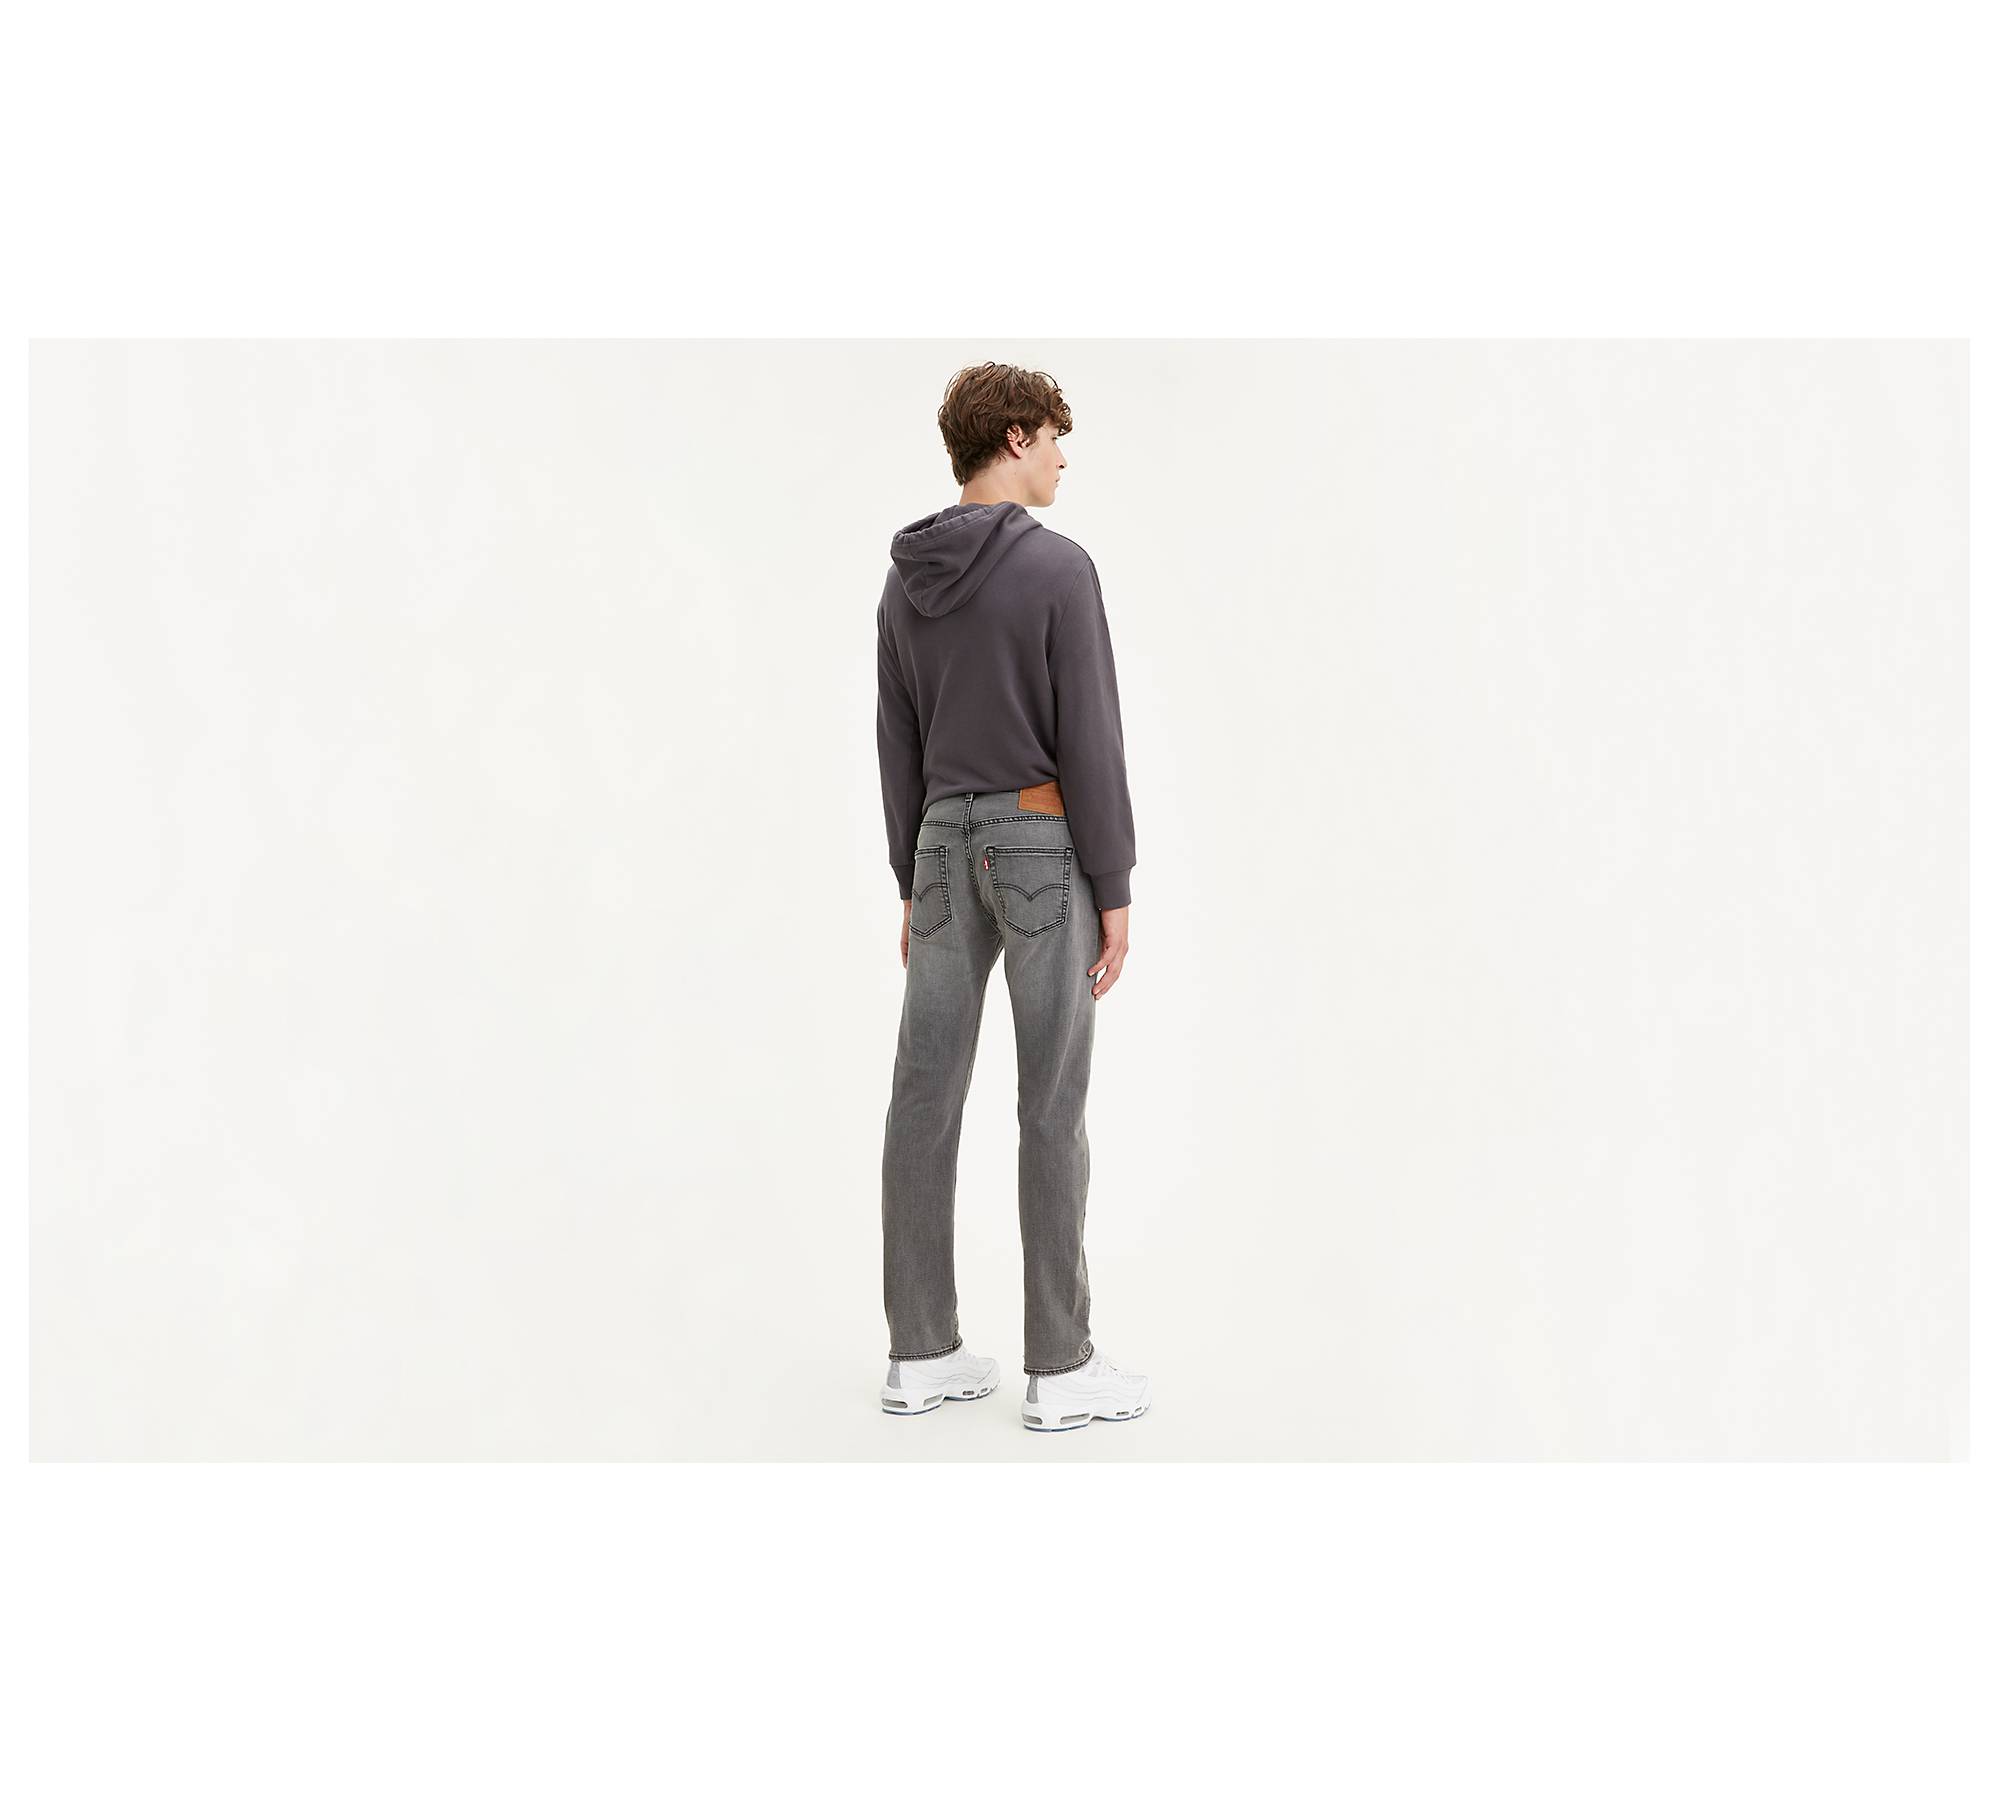 501® Original Fit Men's Jeans - Grey